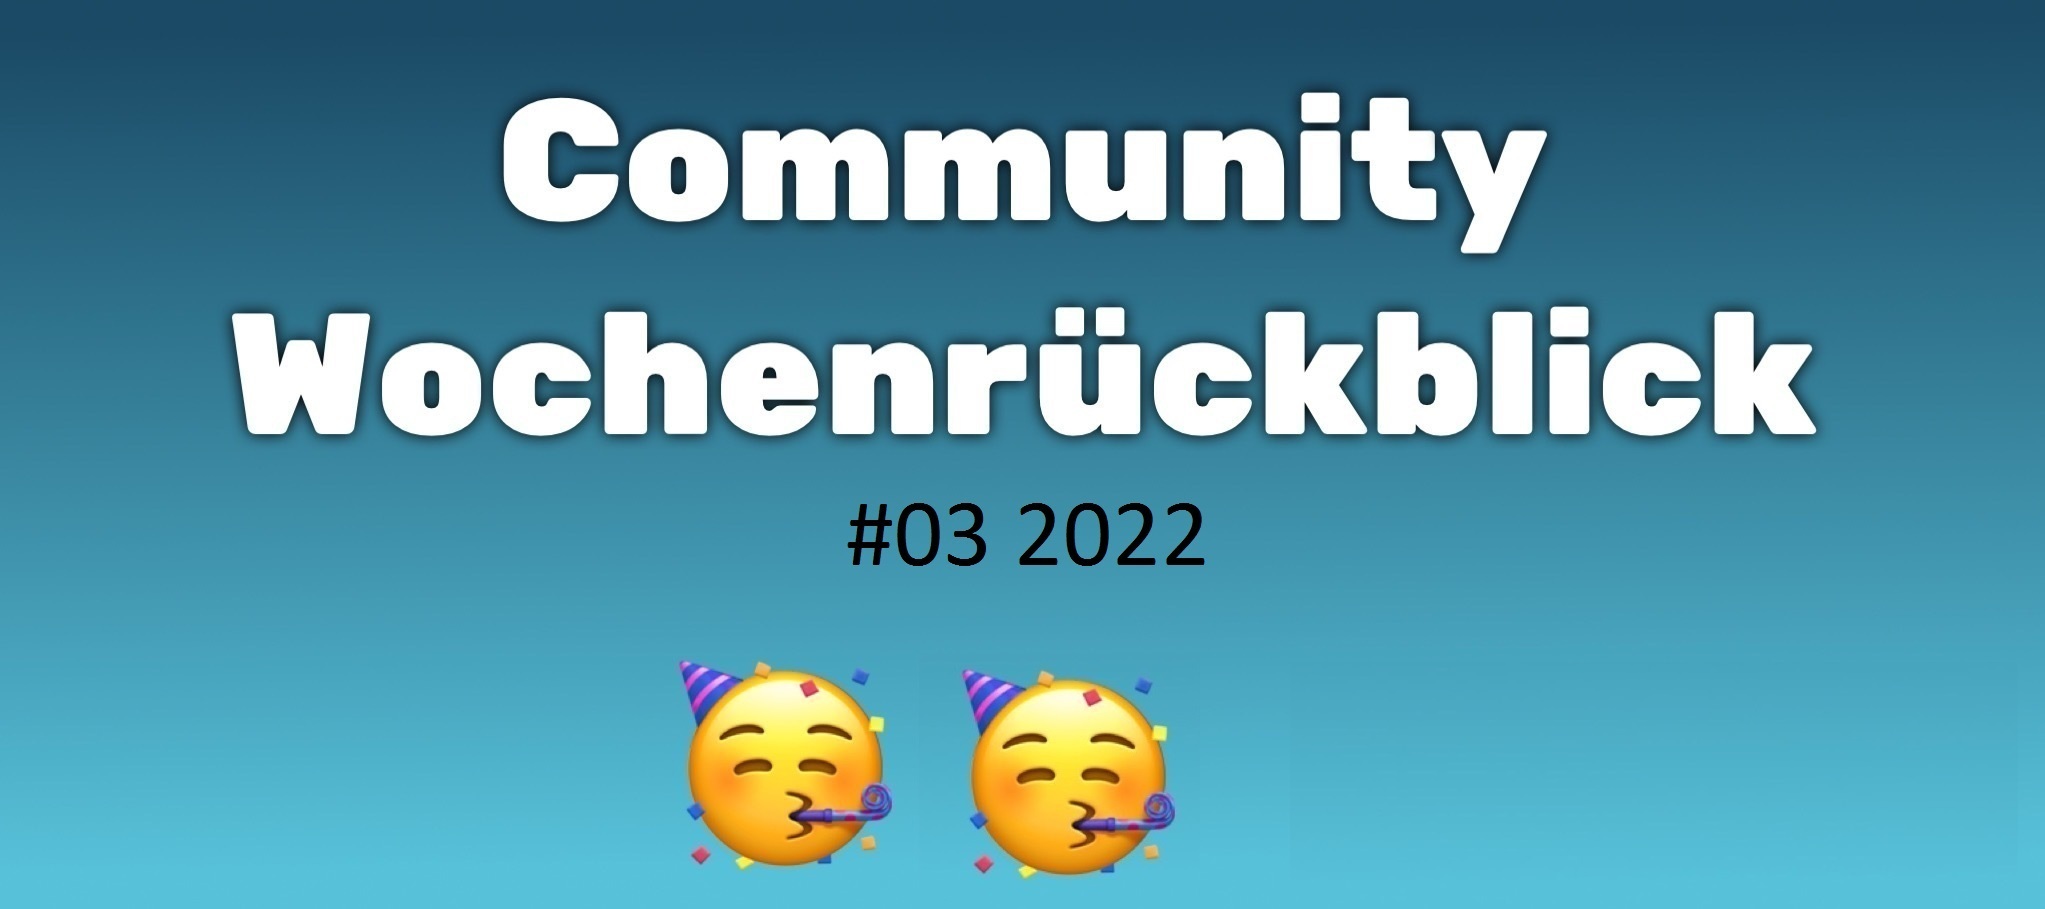 Community-Wochenrückblick #03/2022